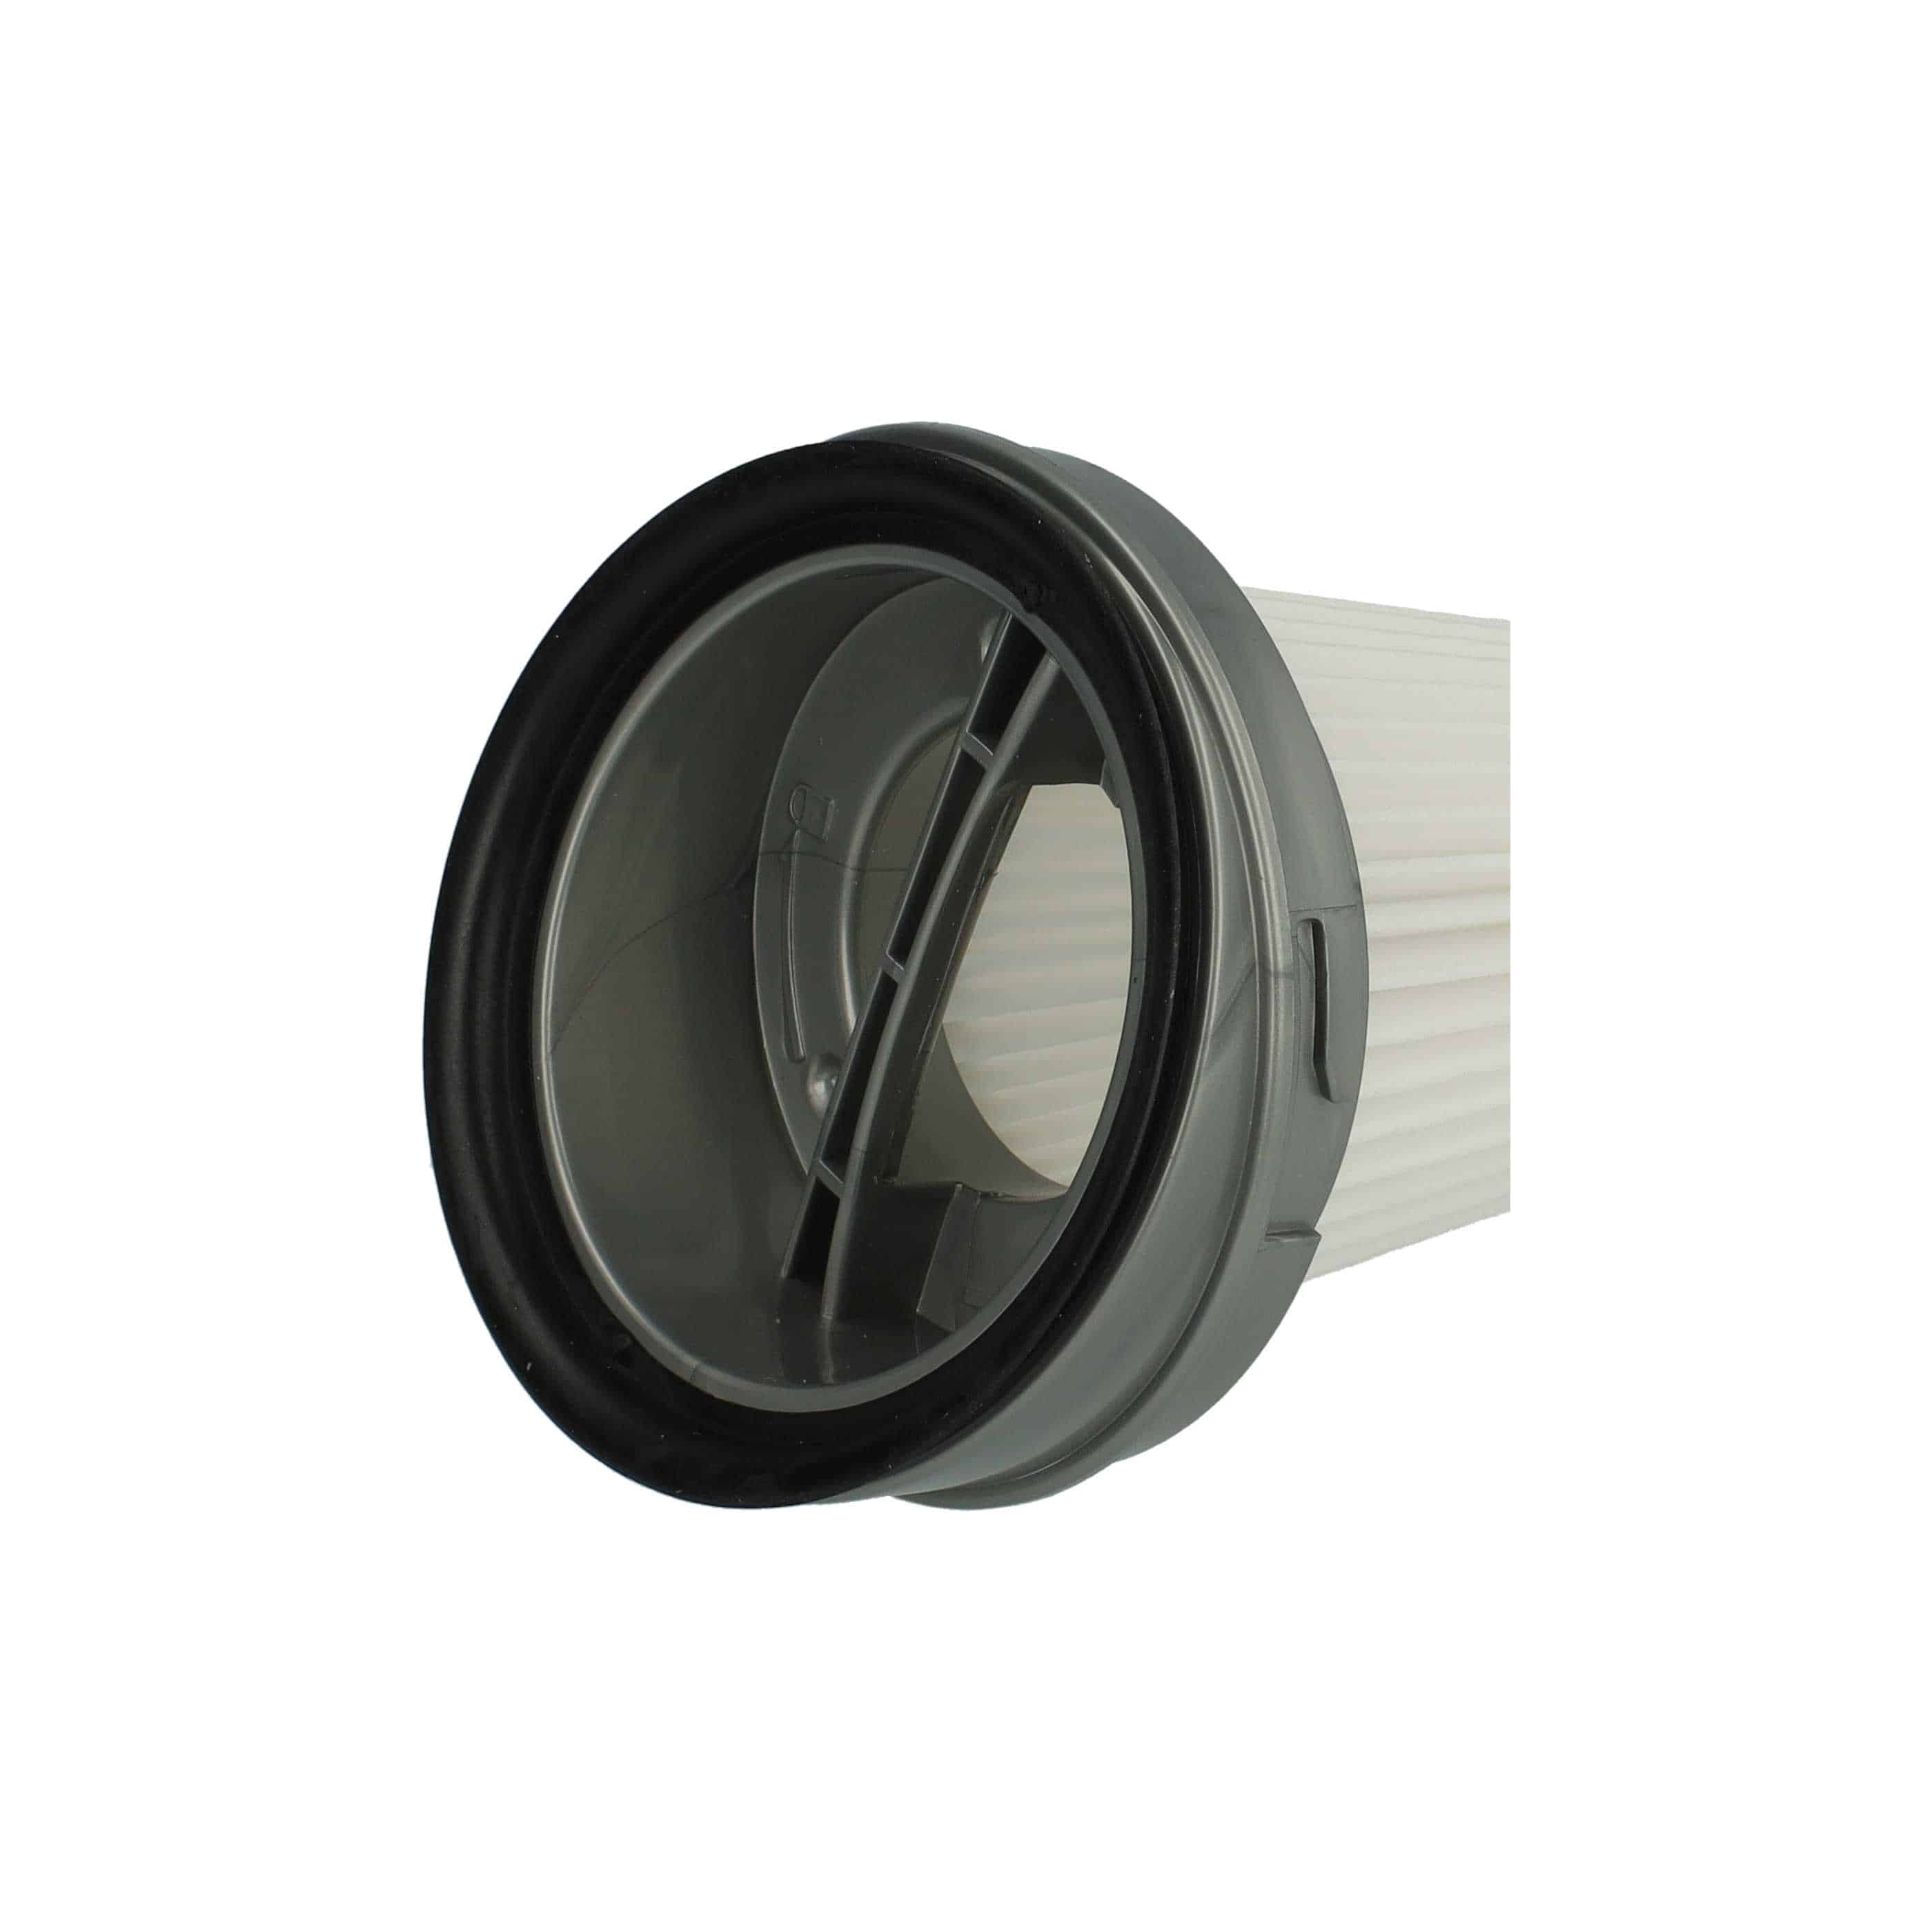 Filtr do odkurzacza Moulinex zamiennik Black & Decker SVF11, 1004708-73 - filtr fałdowany H11